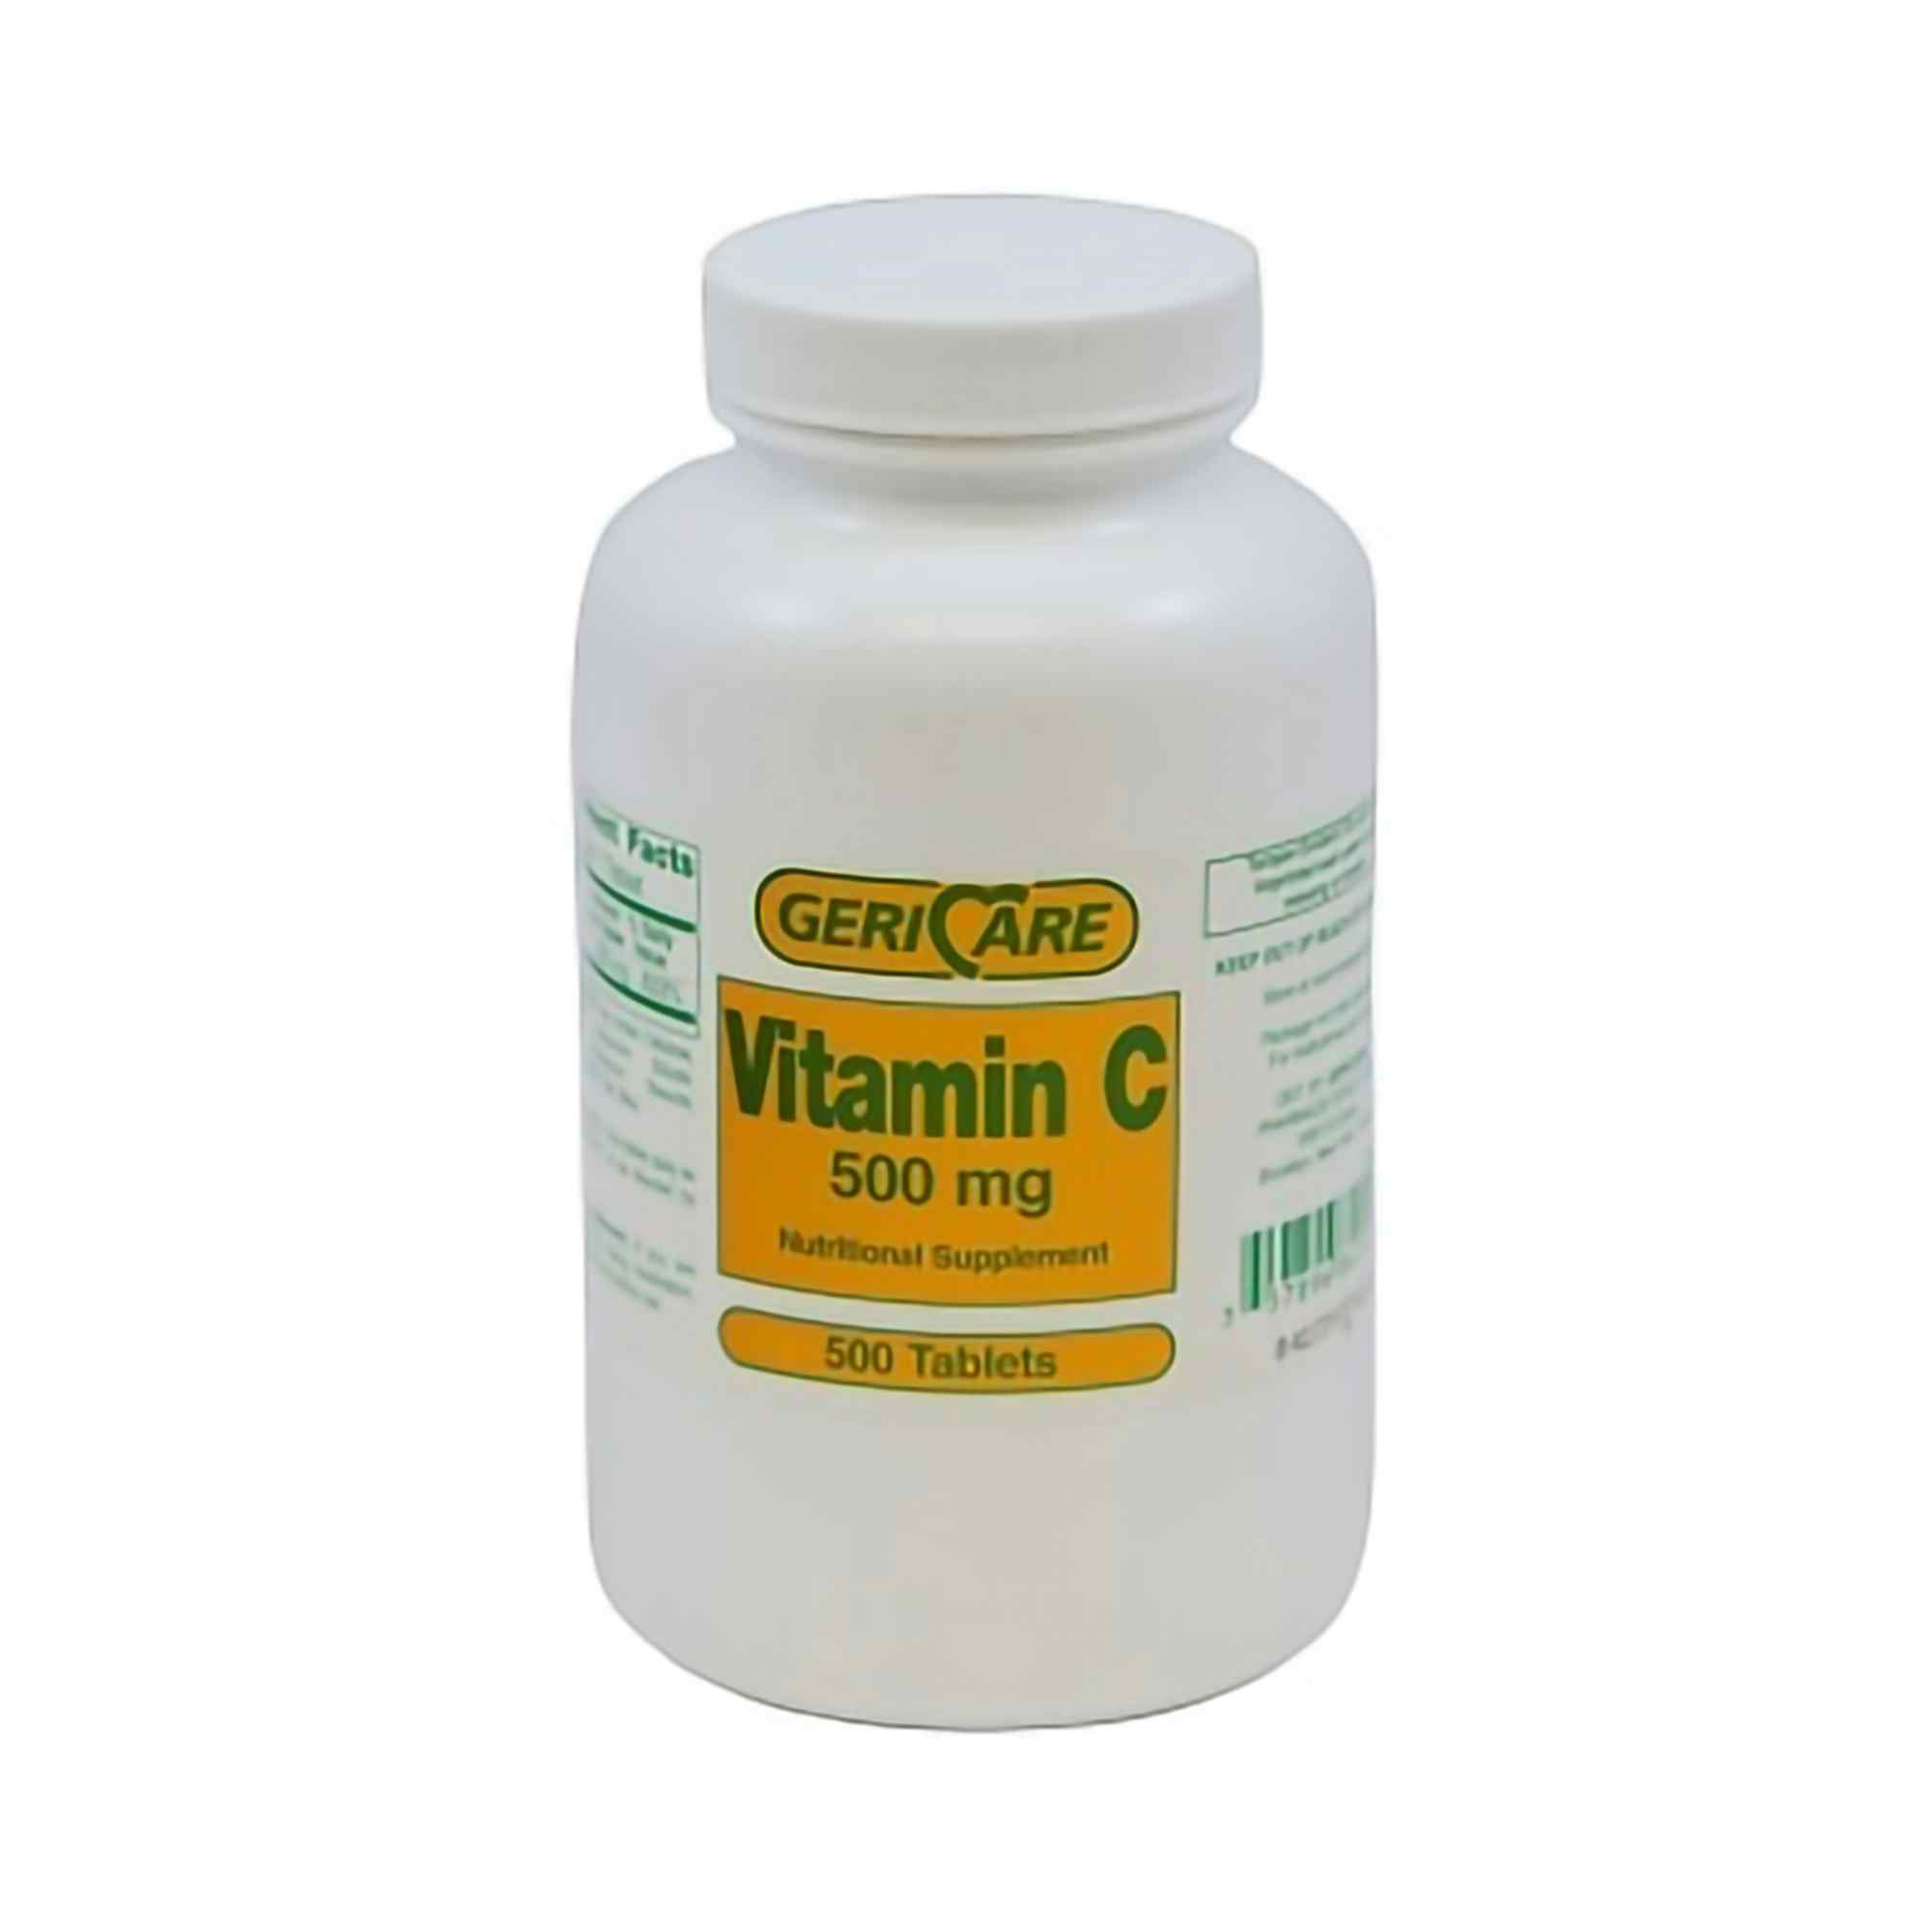 Geri-Care Ascorbic Acid Vitamin C Supplement 500 mg, Tablet, 841-50-GCP, 500 Tablets - 1 Bottle